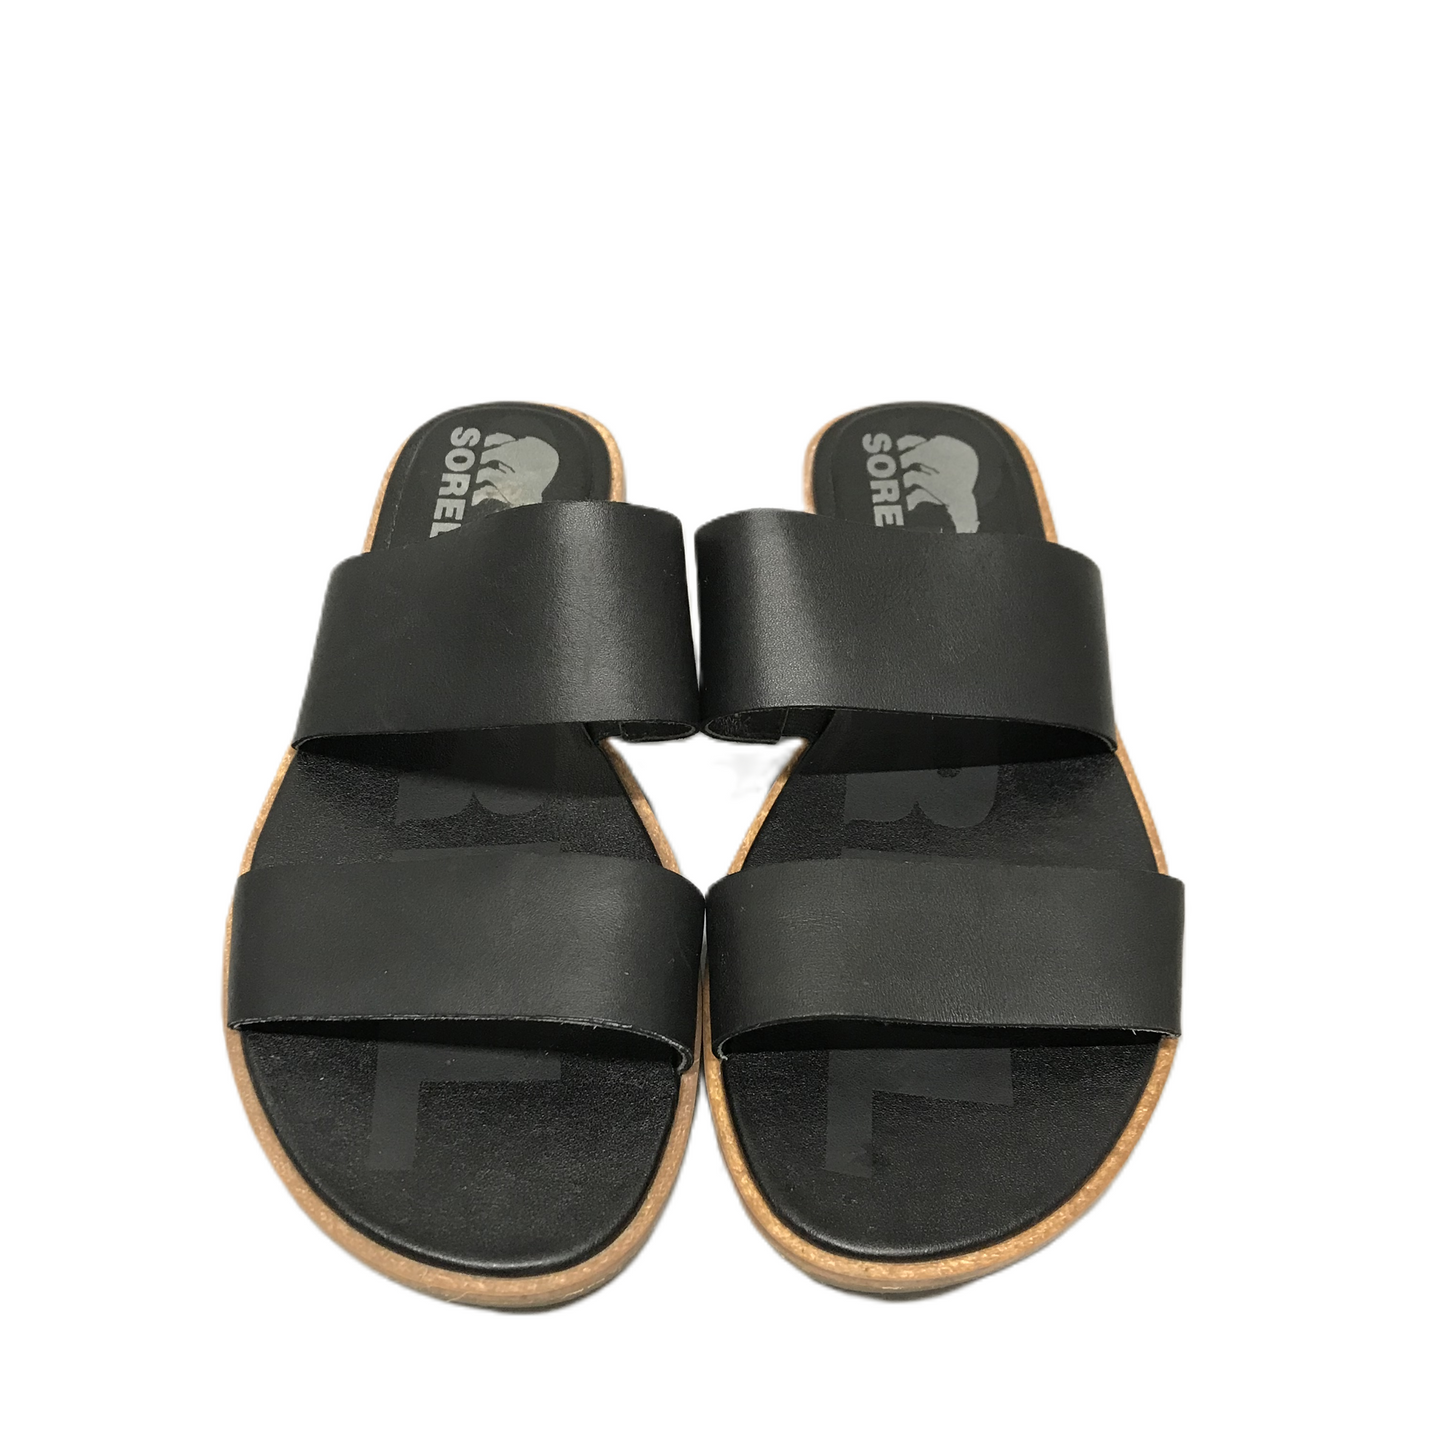 Black Sandals Flats By Sorel, Size: 8